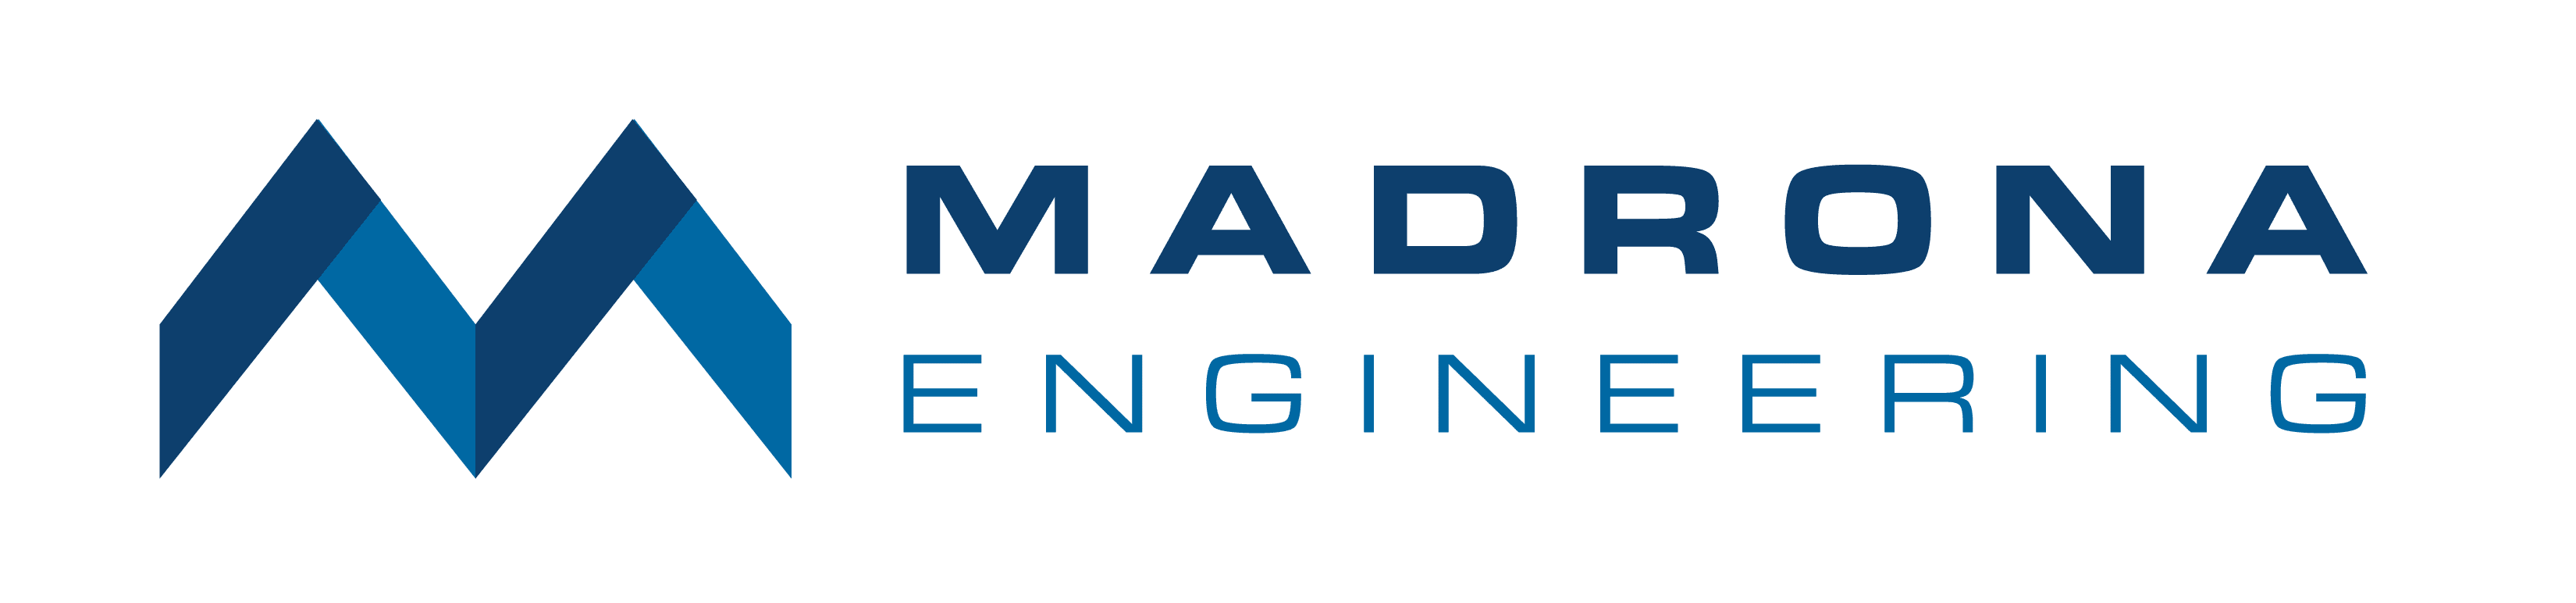 Madrona Post Frame Engineering